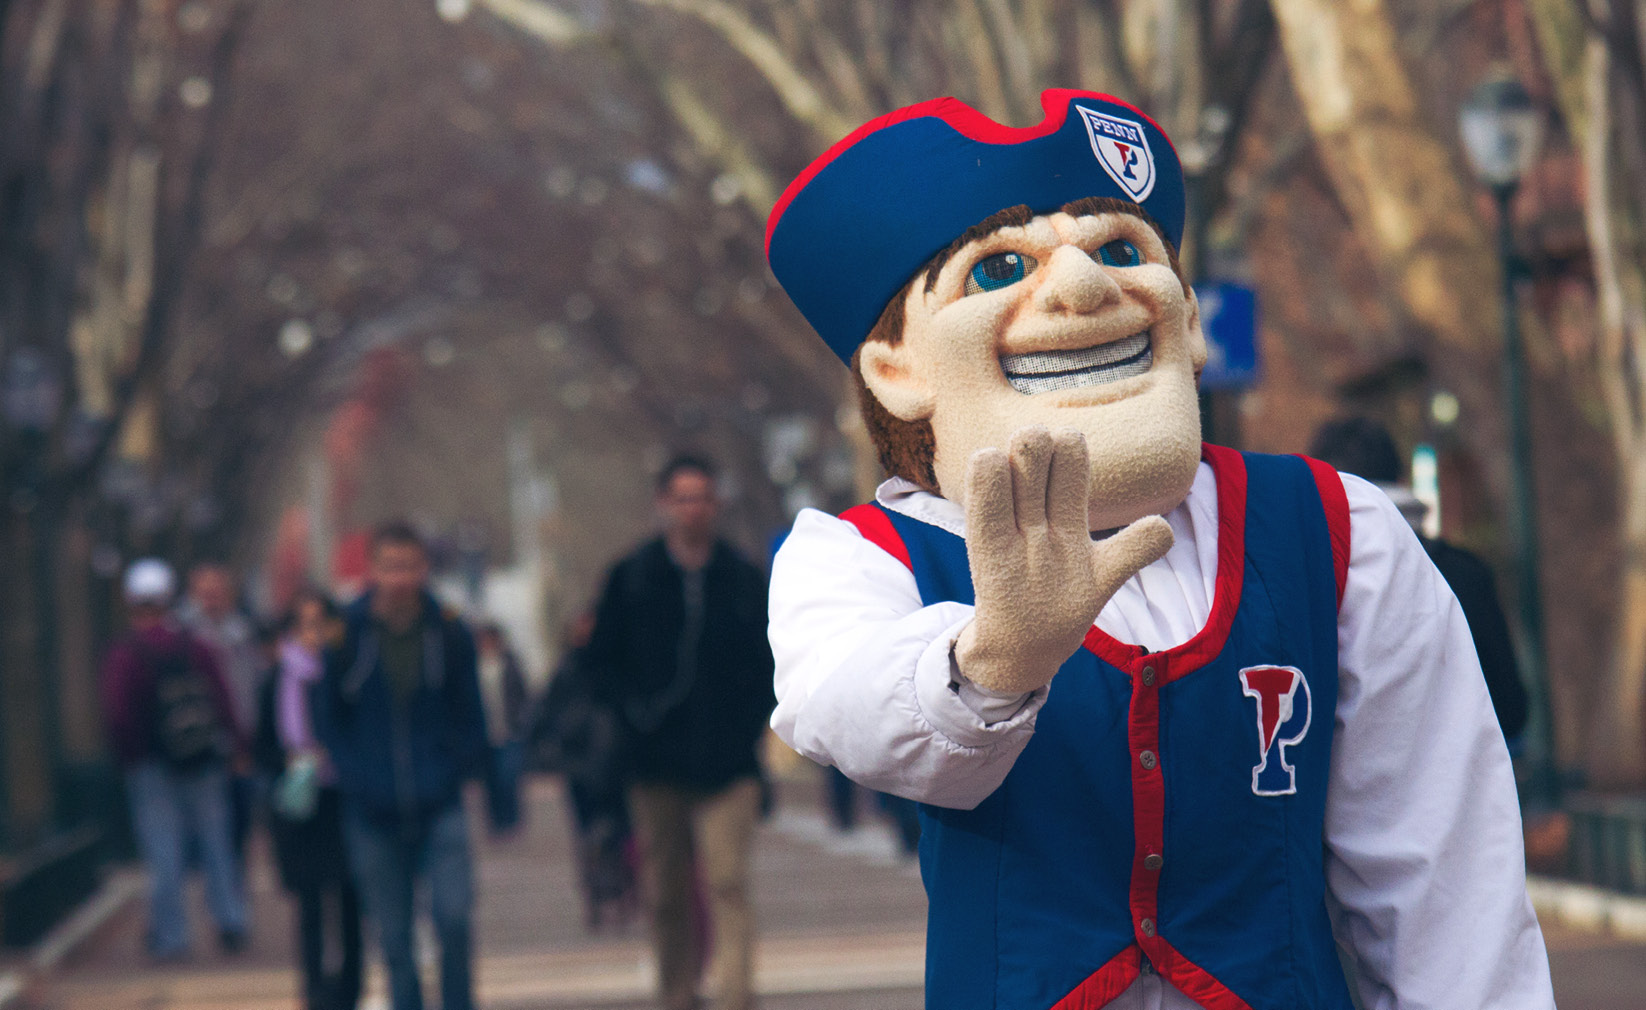 The University of Pennsylvania mascot, the Quaker, strolls through West Philadelphia.